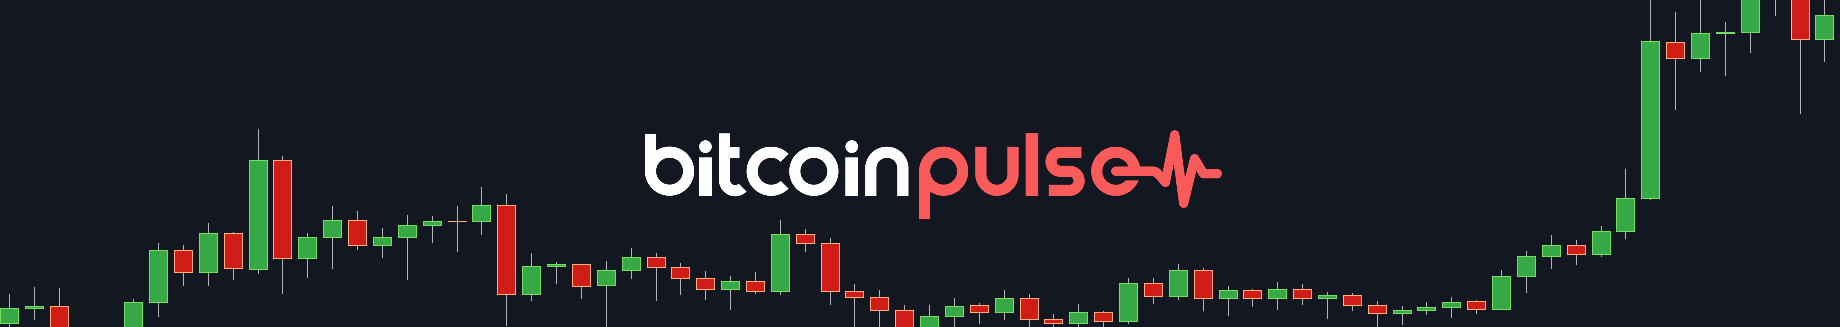 Happy New Year Bitcoin! - Bitcoin Pulse #95